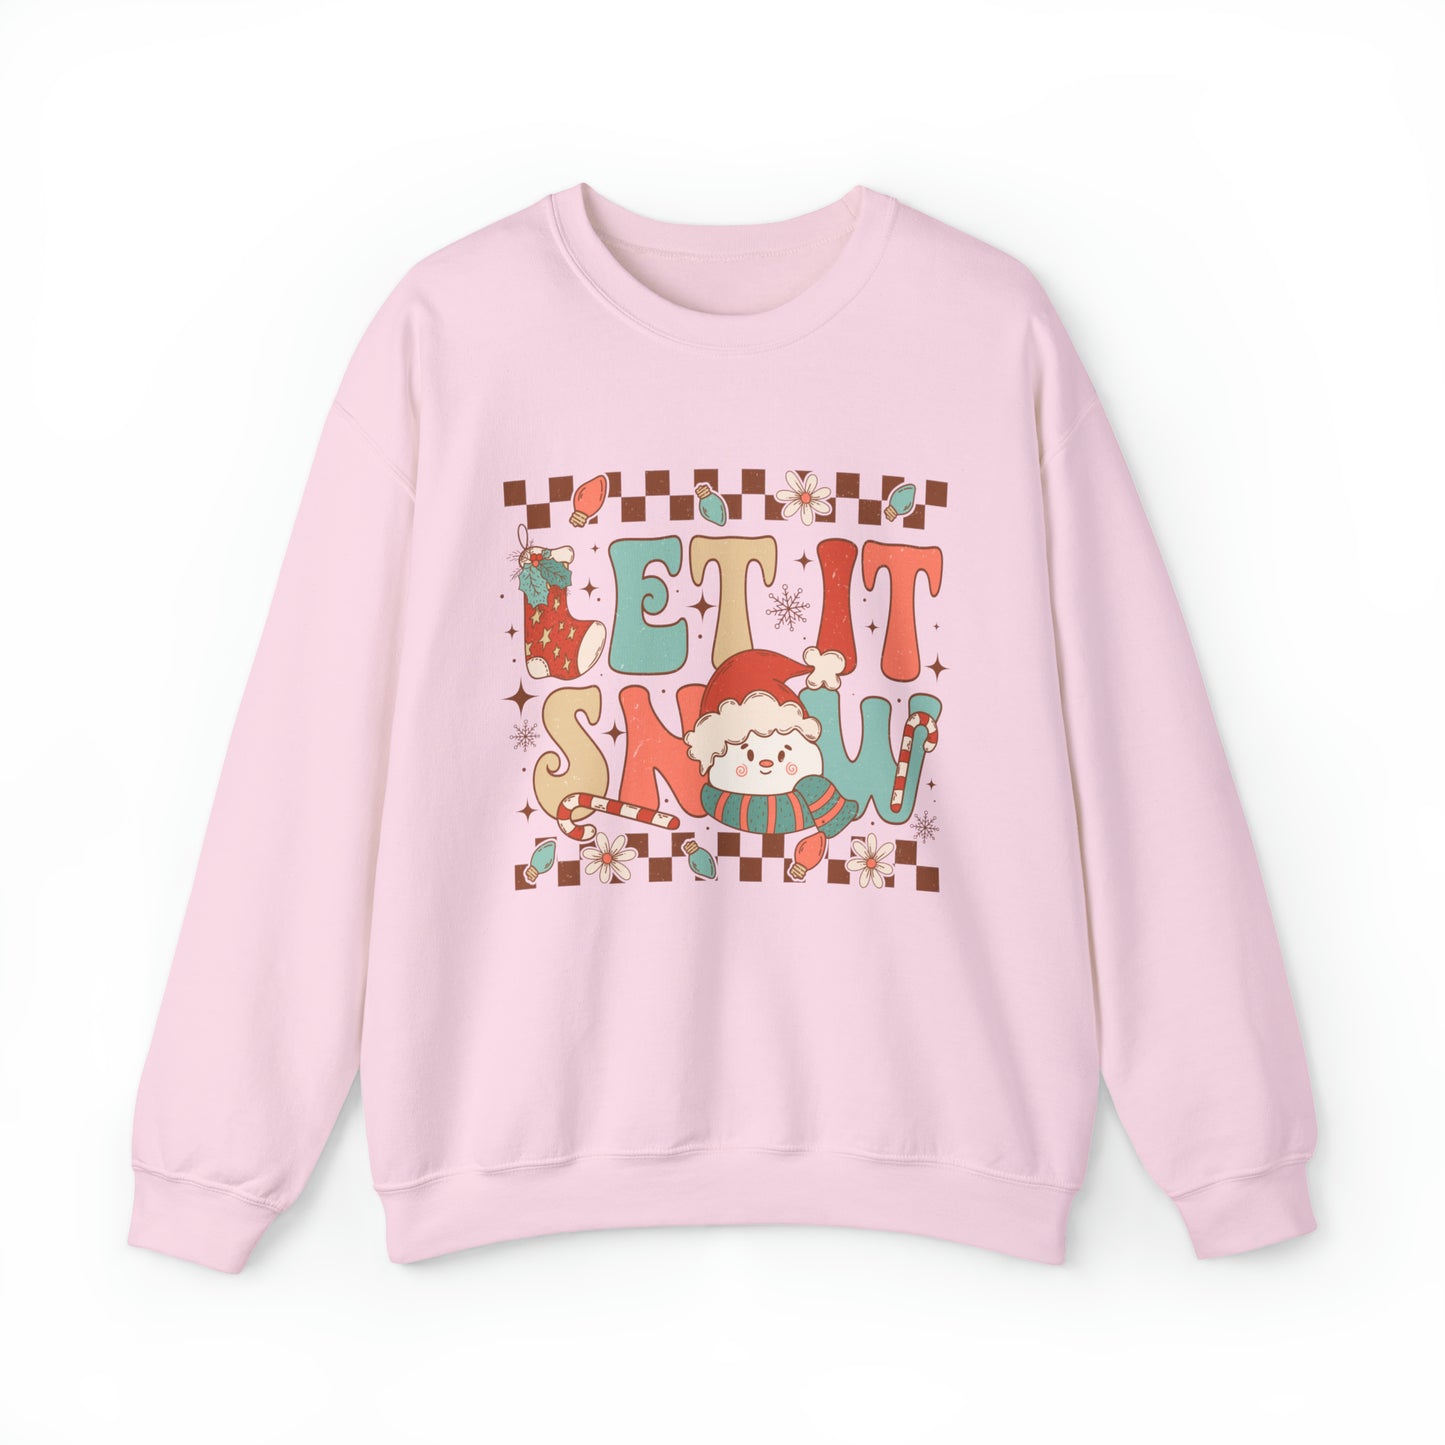 Let it Snow Women's Christmas Sweatshirt